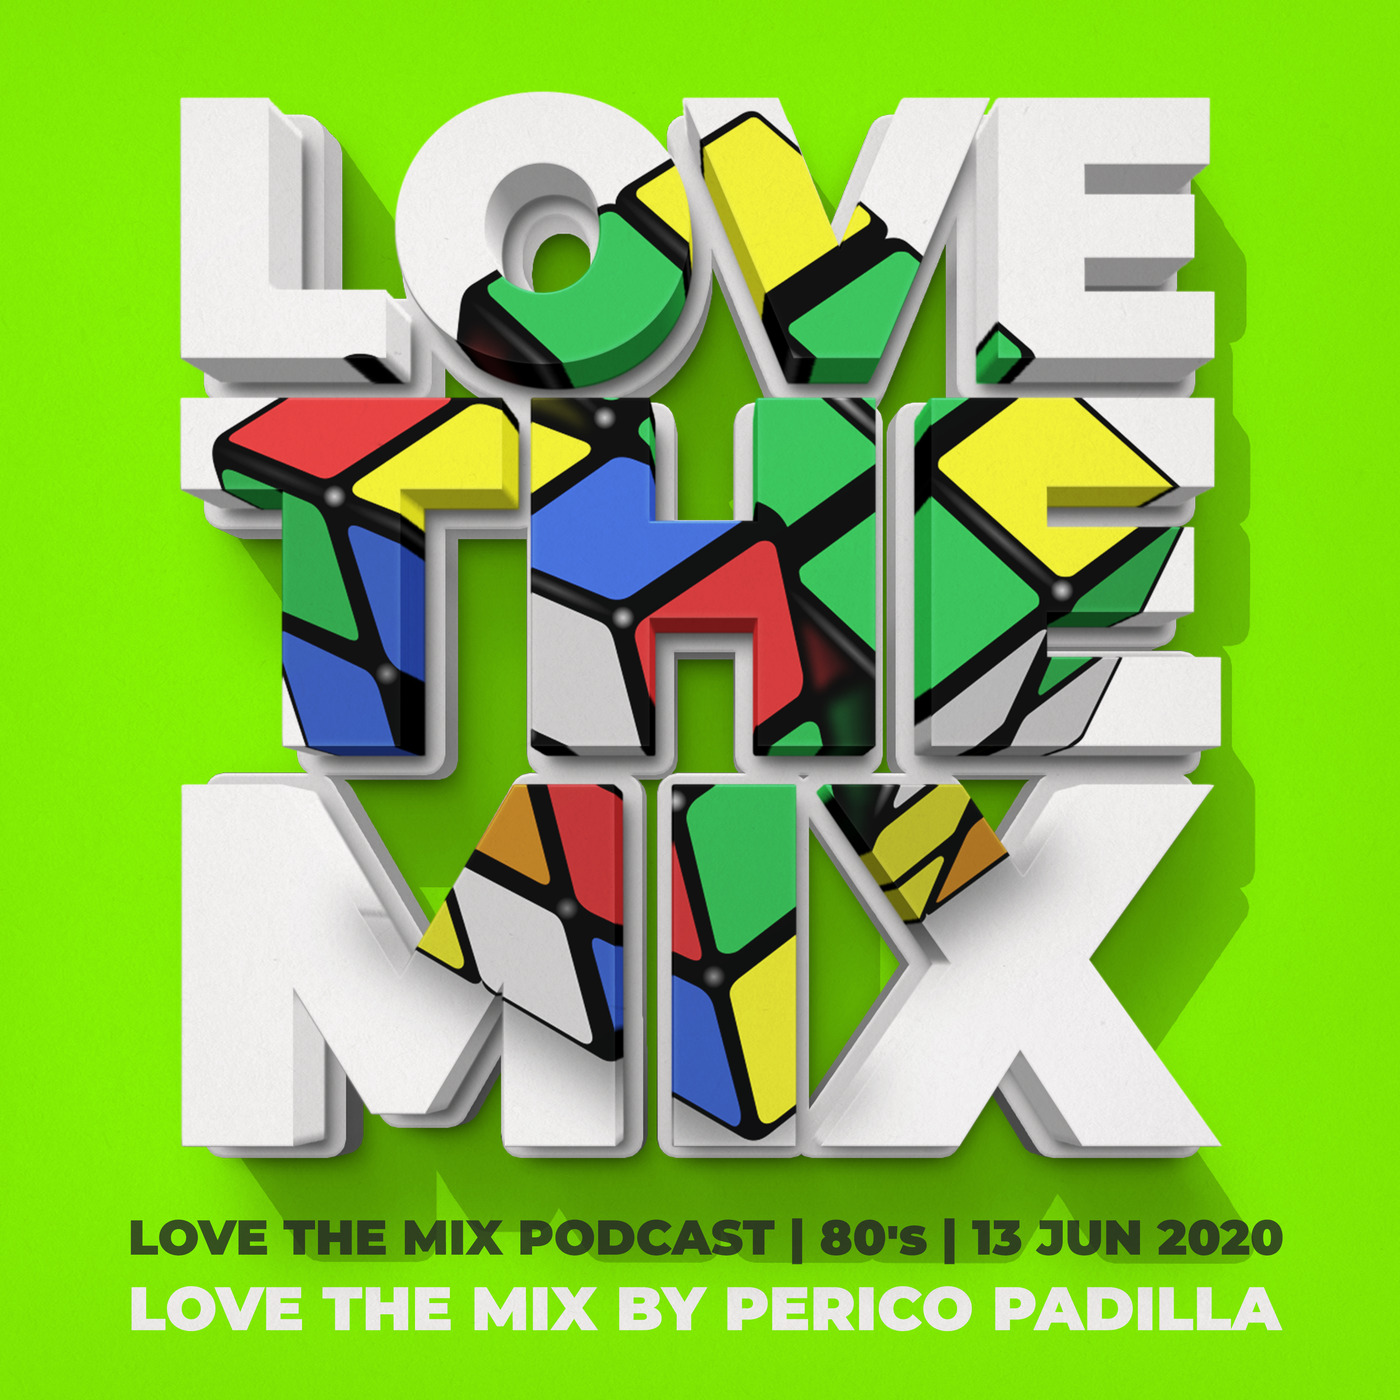 LOVE THE MIX PODCAST | 80's | 13 JUN 2020 By Perico Padilla